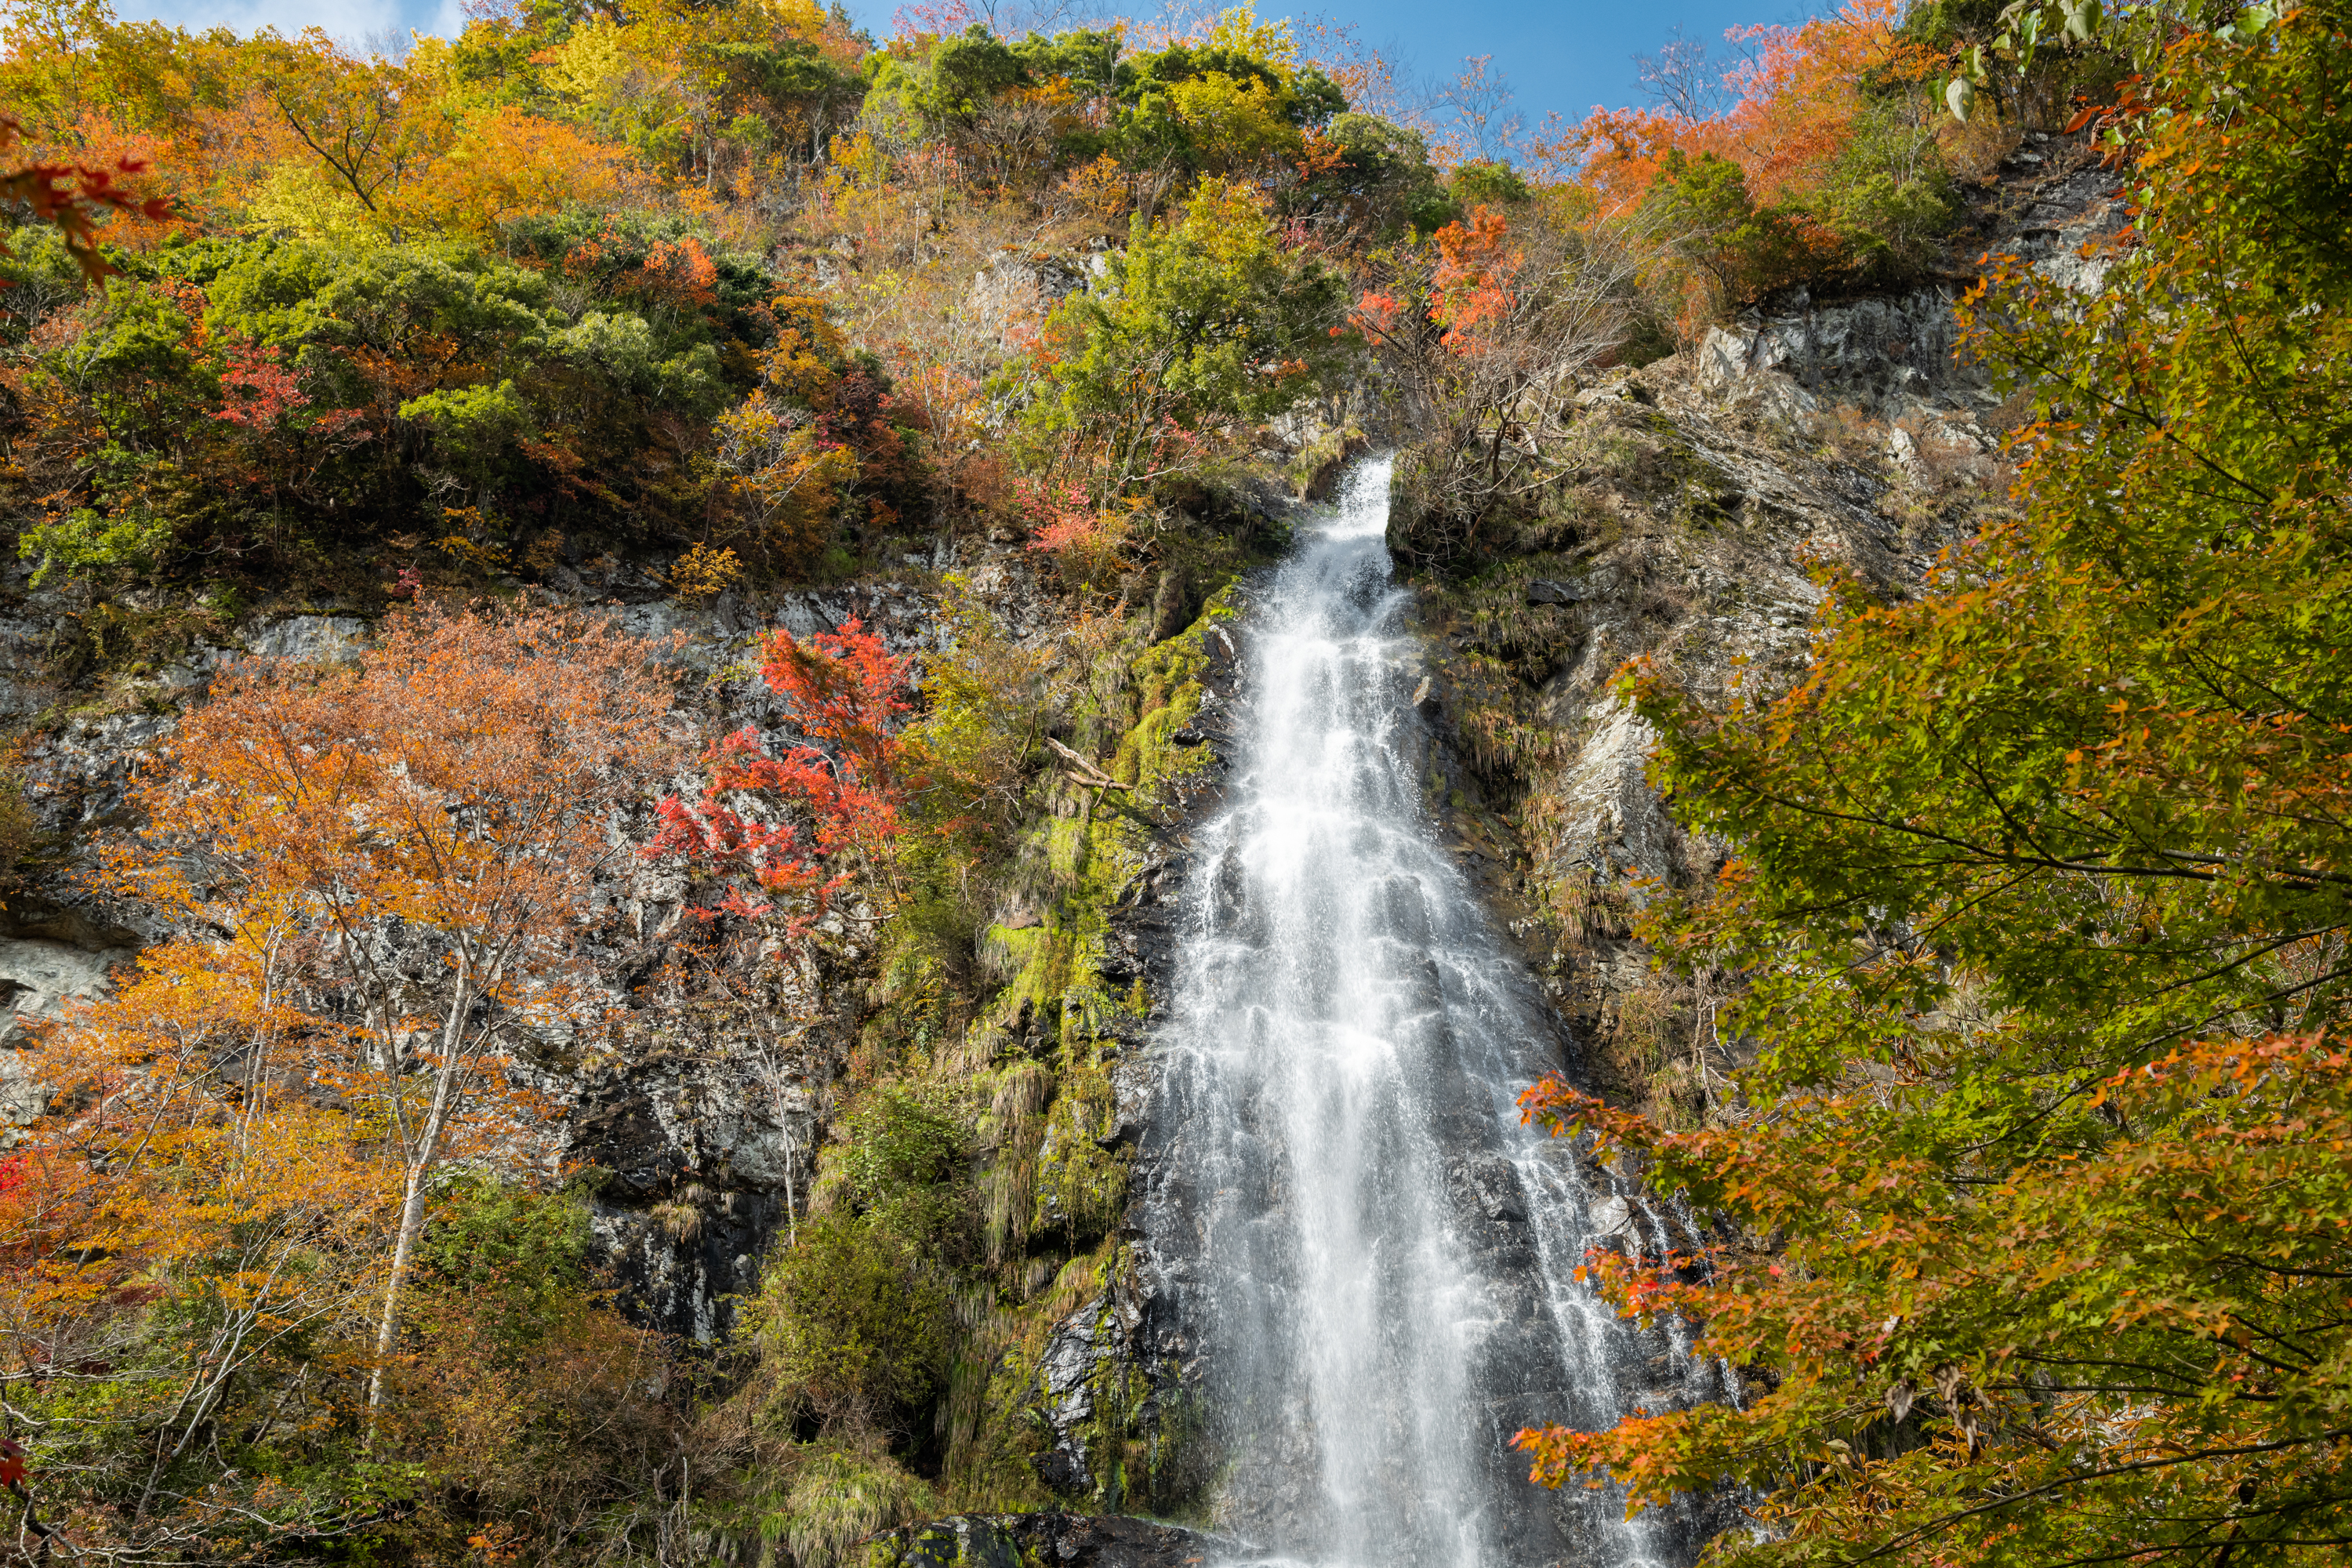 NIKON-CORPORATION_NIKON-D85019895 兵庫県  天滝 (兵庫県一の落差を誇る紅葉景色の美しい絶景の滝 !撮影した写真の紹介、 アクセス情報や撮影ポイントなど!)　